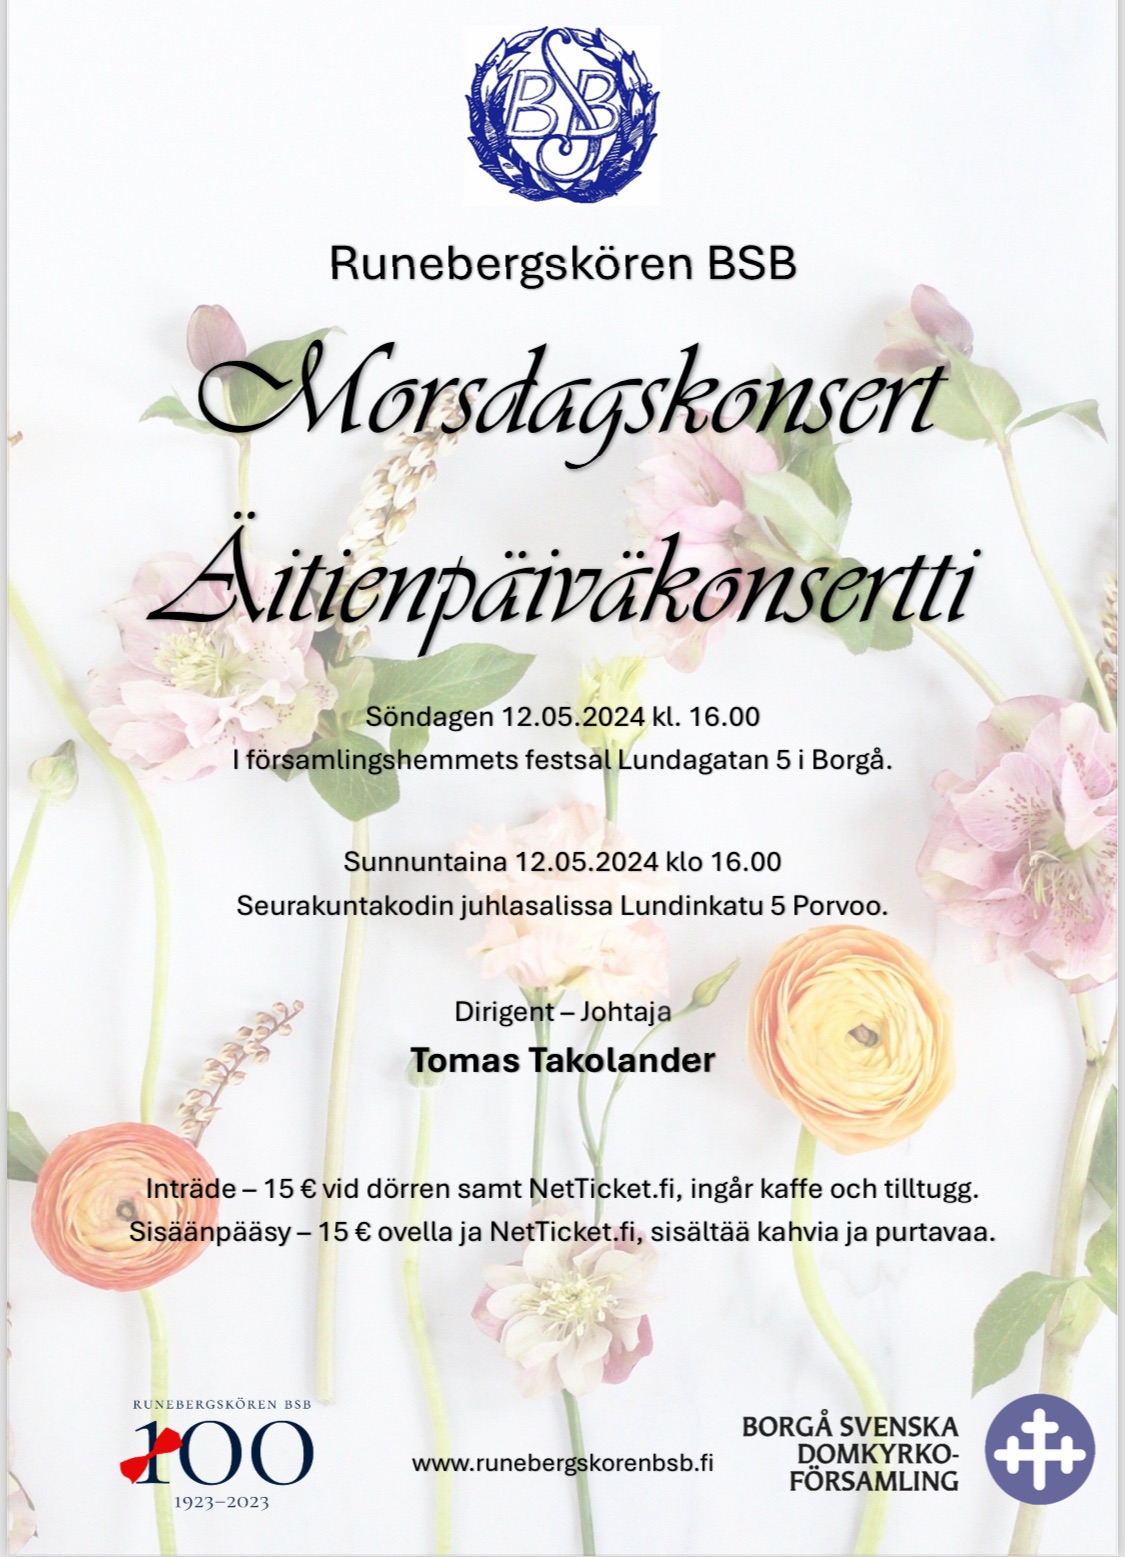 Morsdagskonsert med Runebergskören BSB